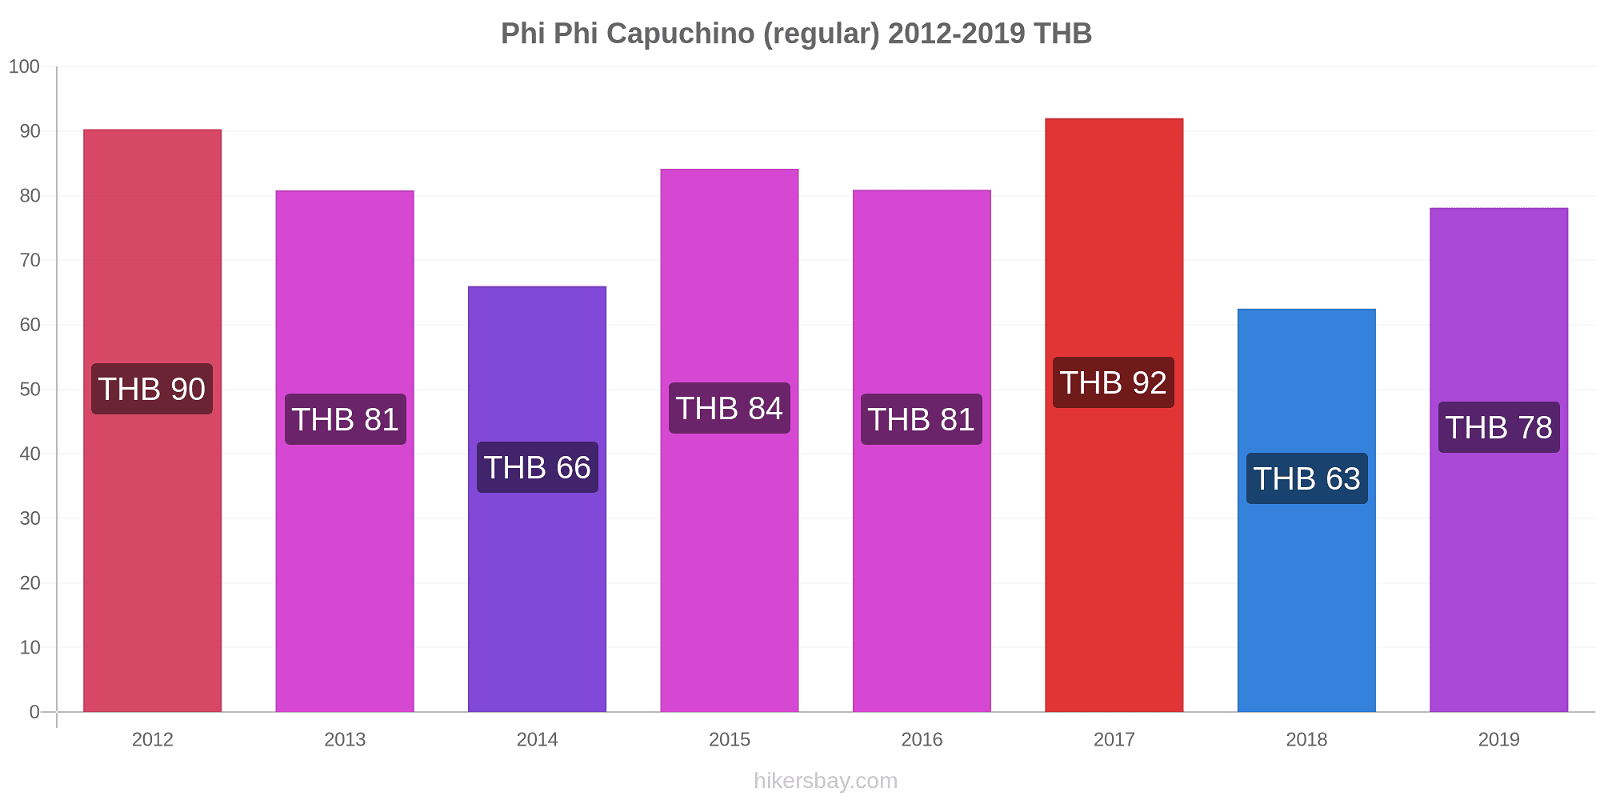 Phi Phi cambios de precios Capuchino (regular) hikersbay.com